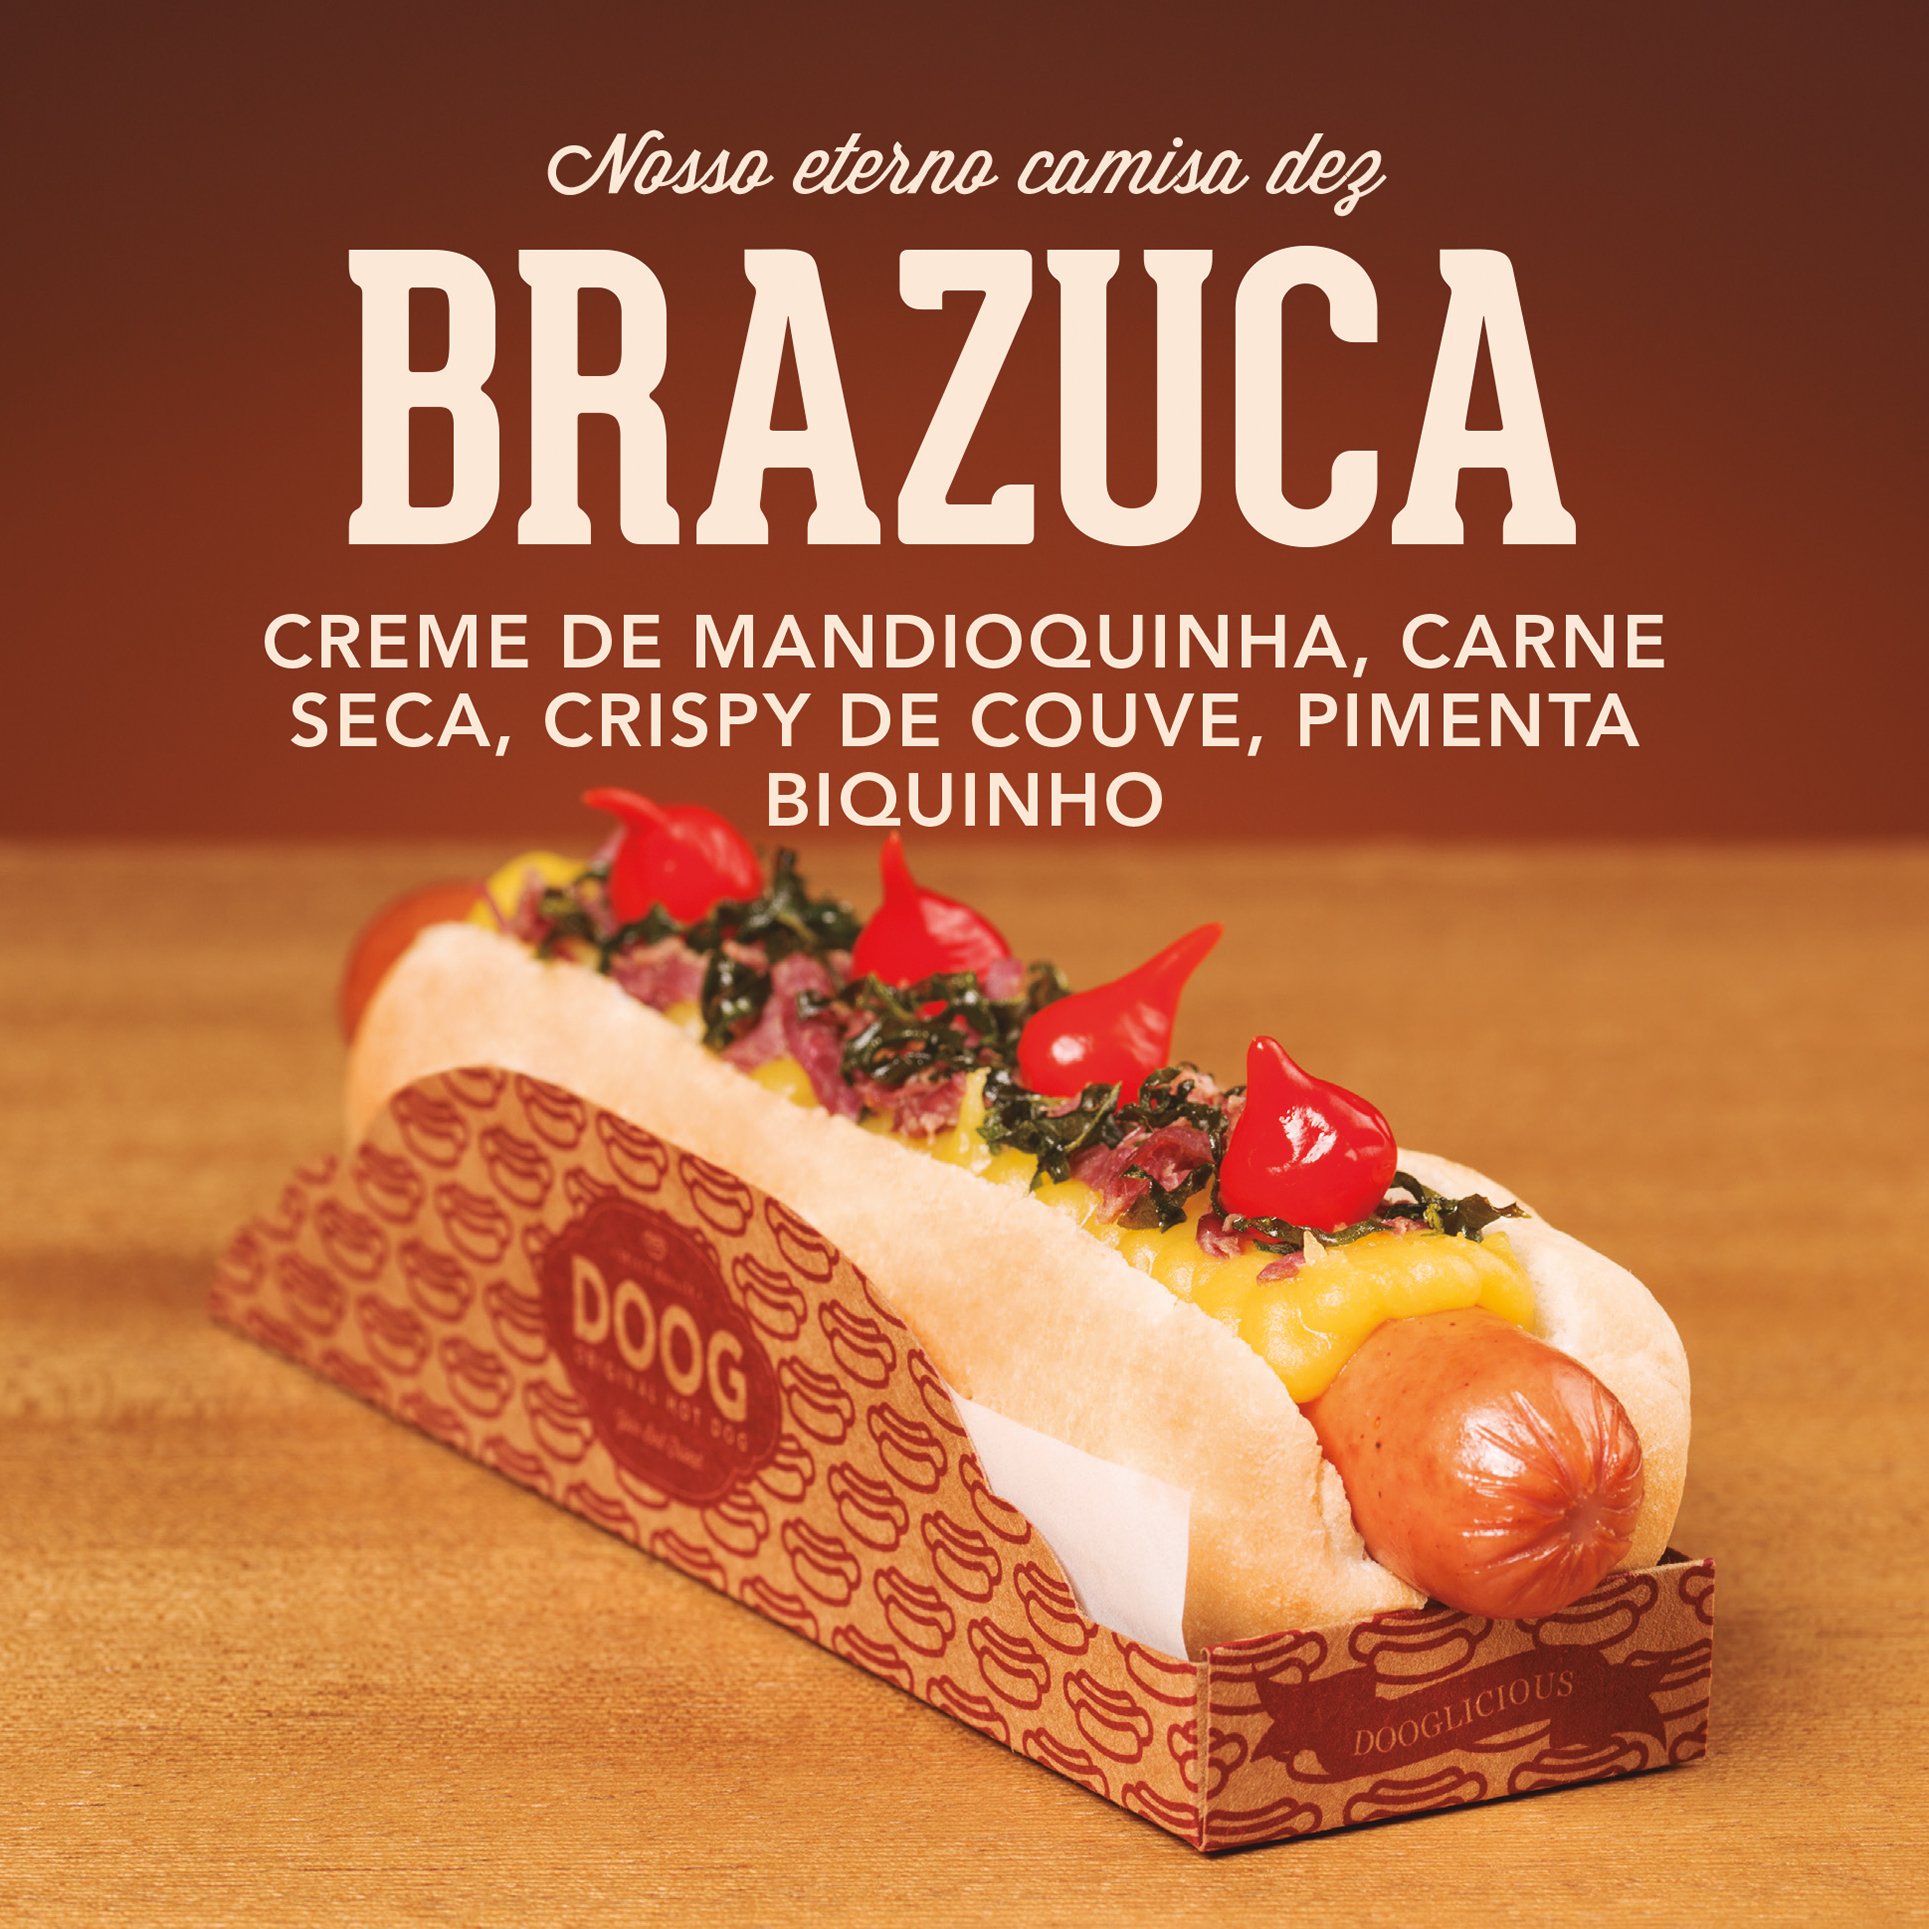 Hot Dog Brasi - Picture of Hot Dog Brasil 2, Manaus - Tripadvisor